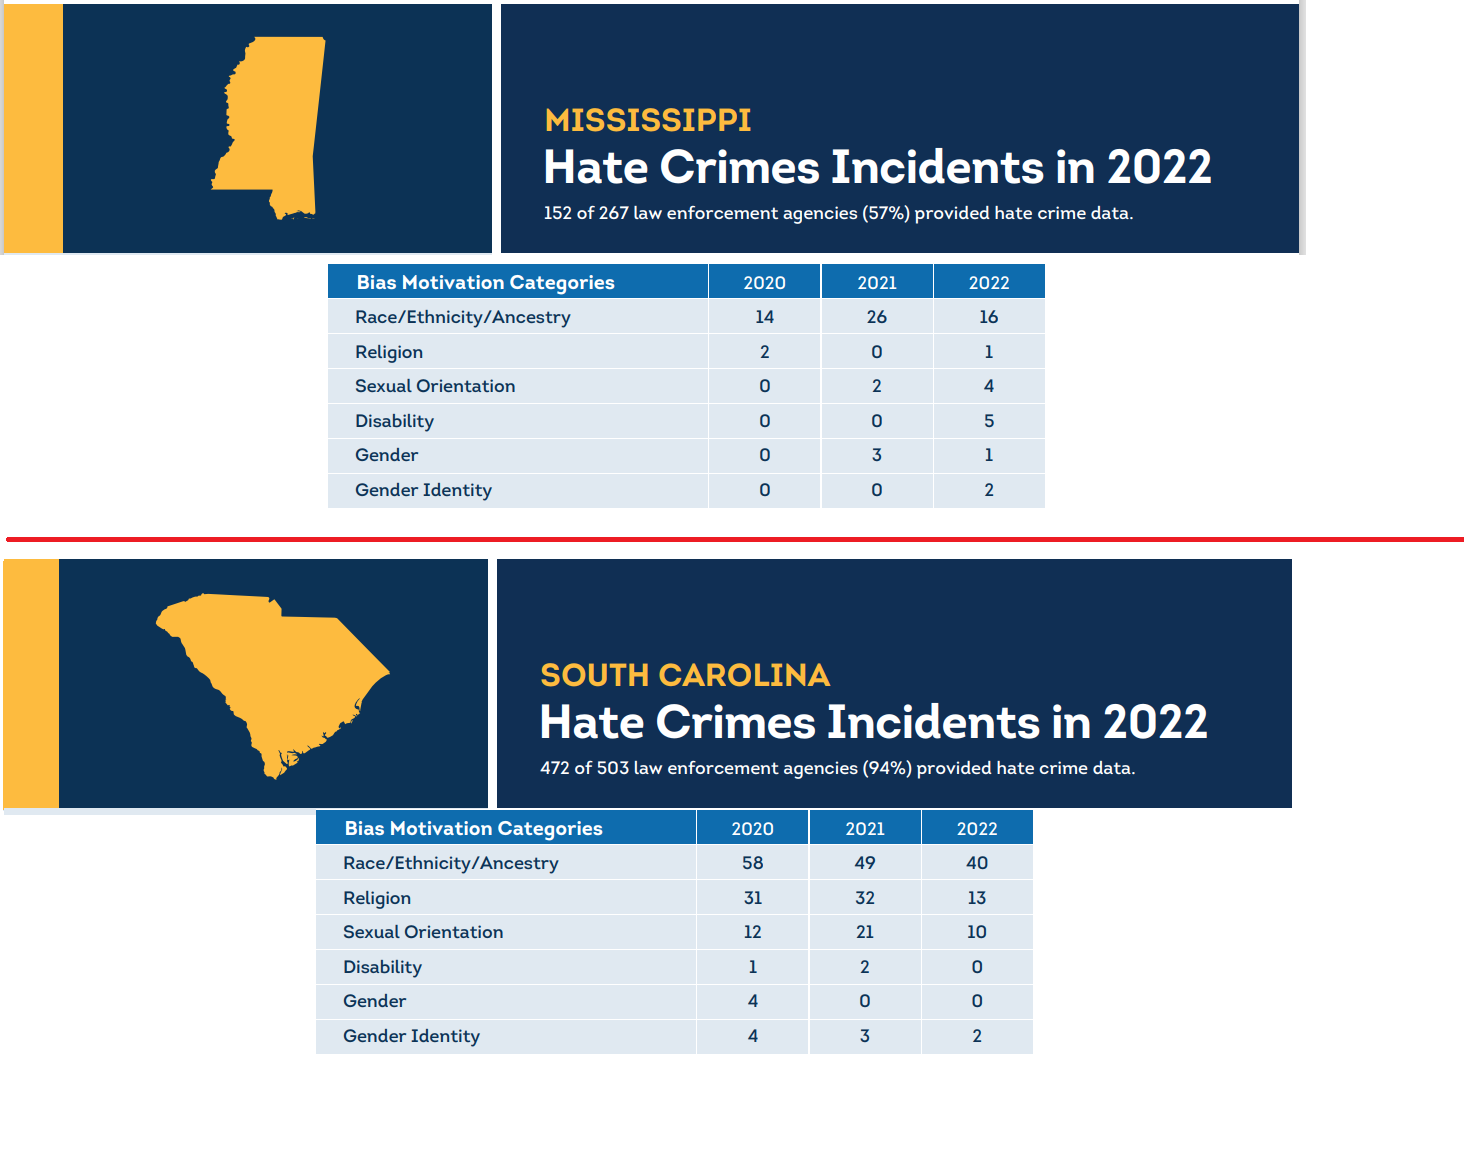 Wisconsin hate crimes